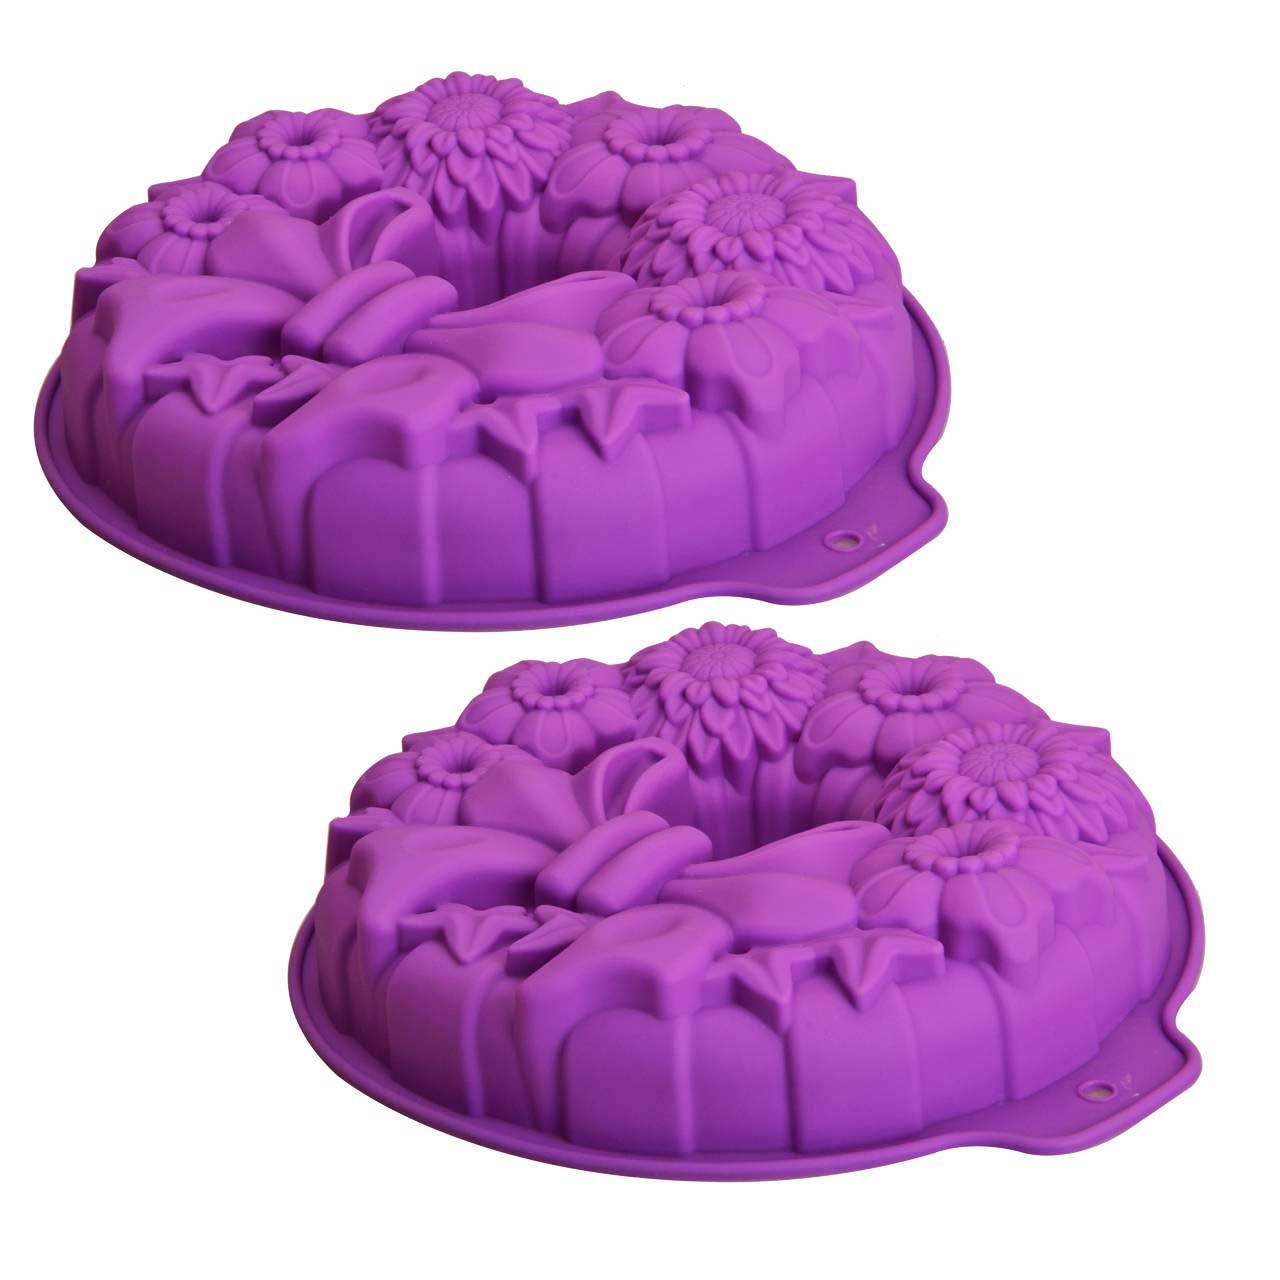 قالب کیک رجینال مدل Flower Basket سایز 26 - بسته 2 عددی